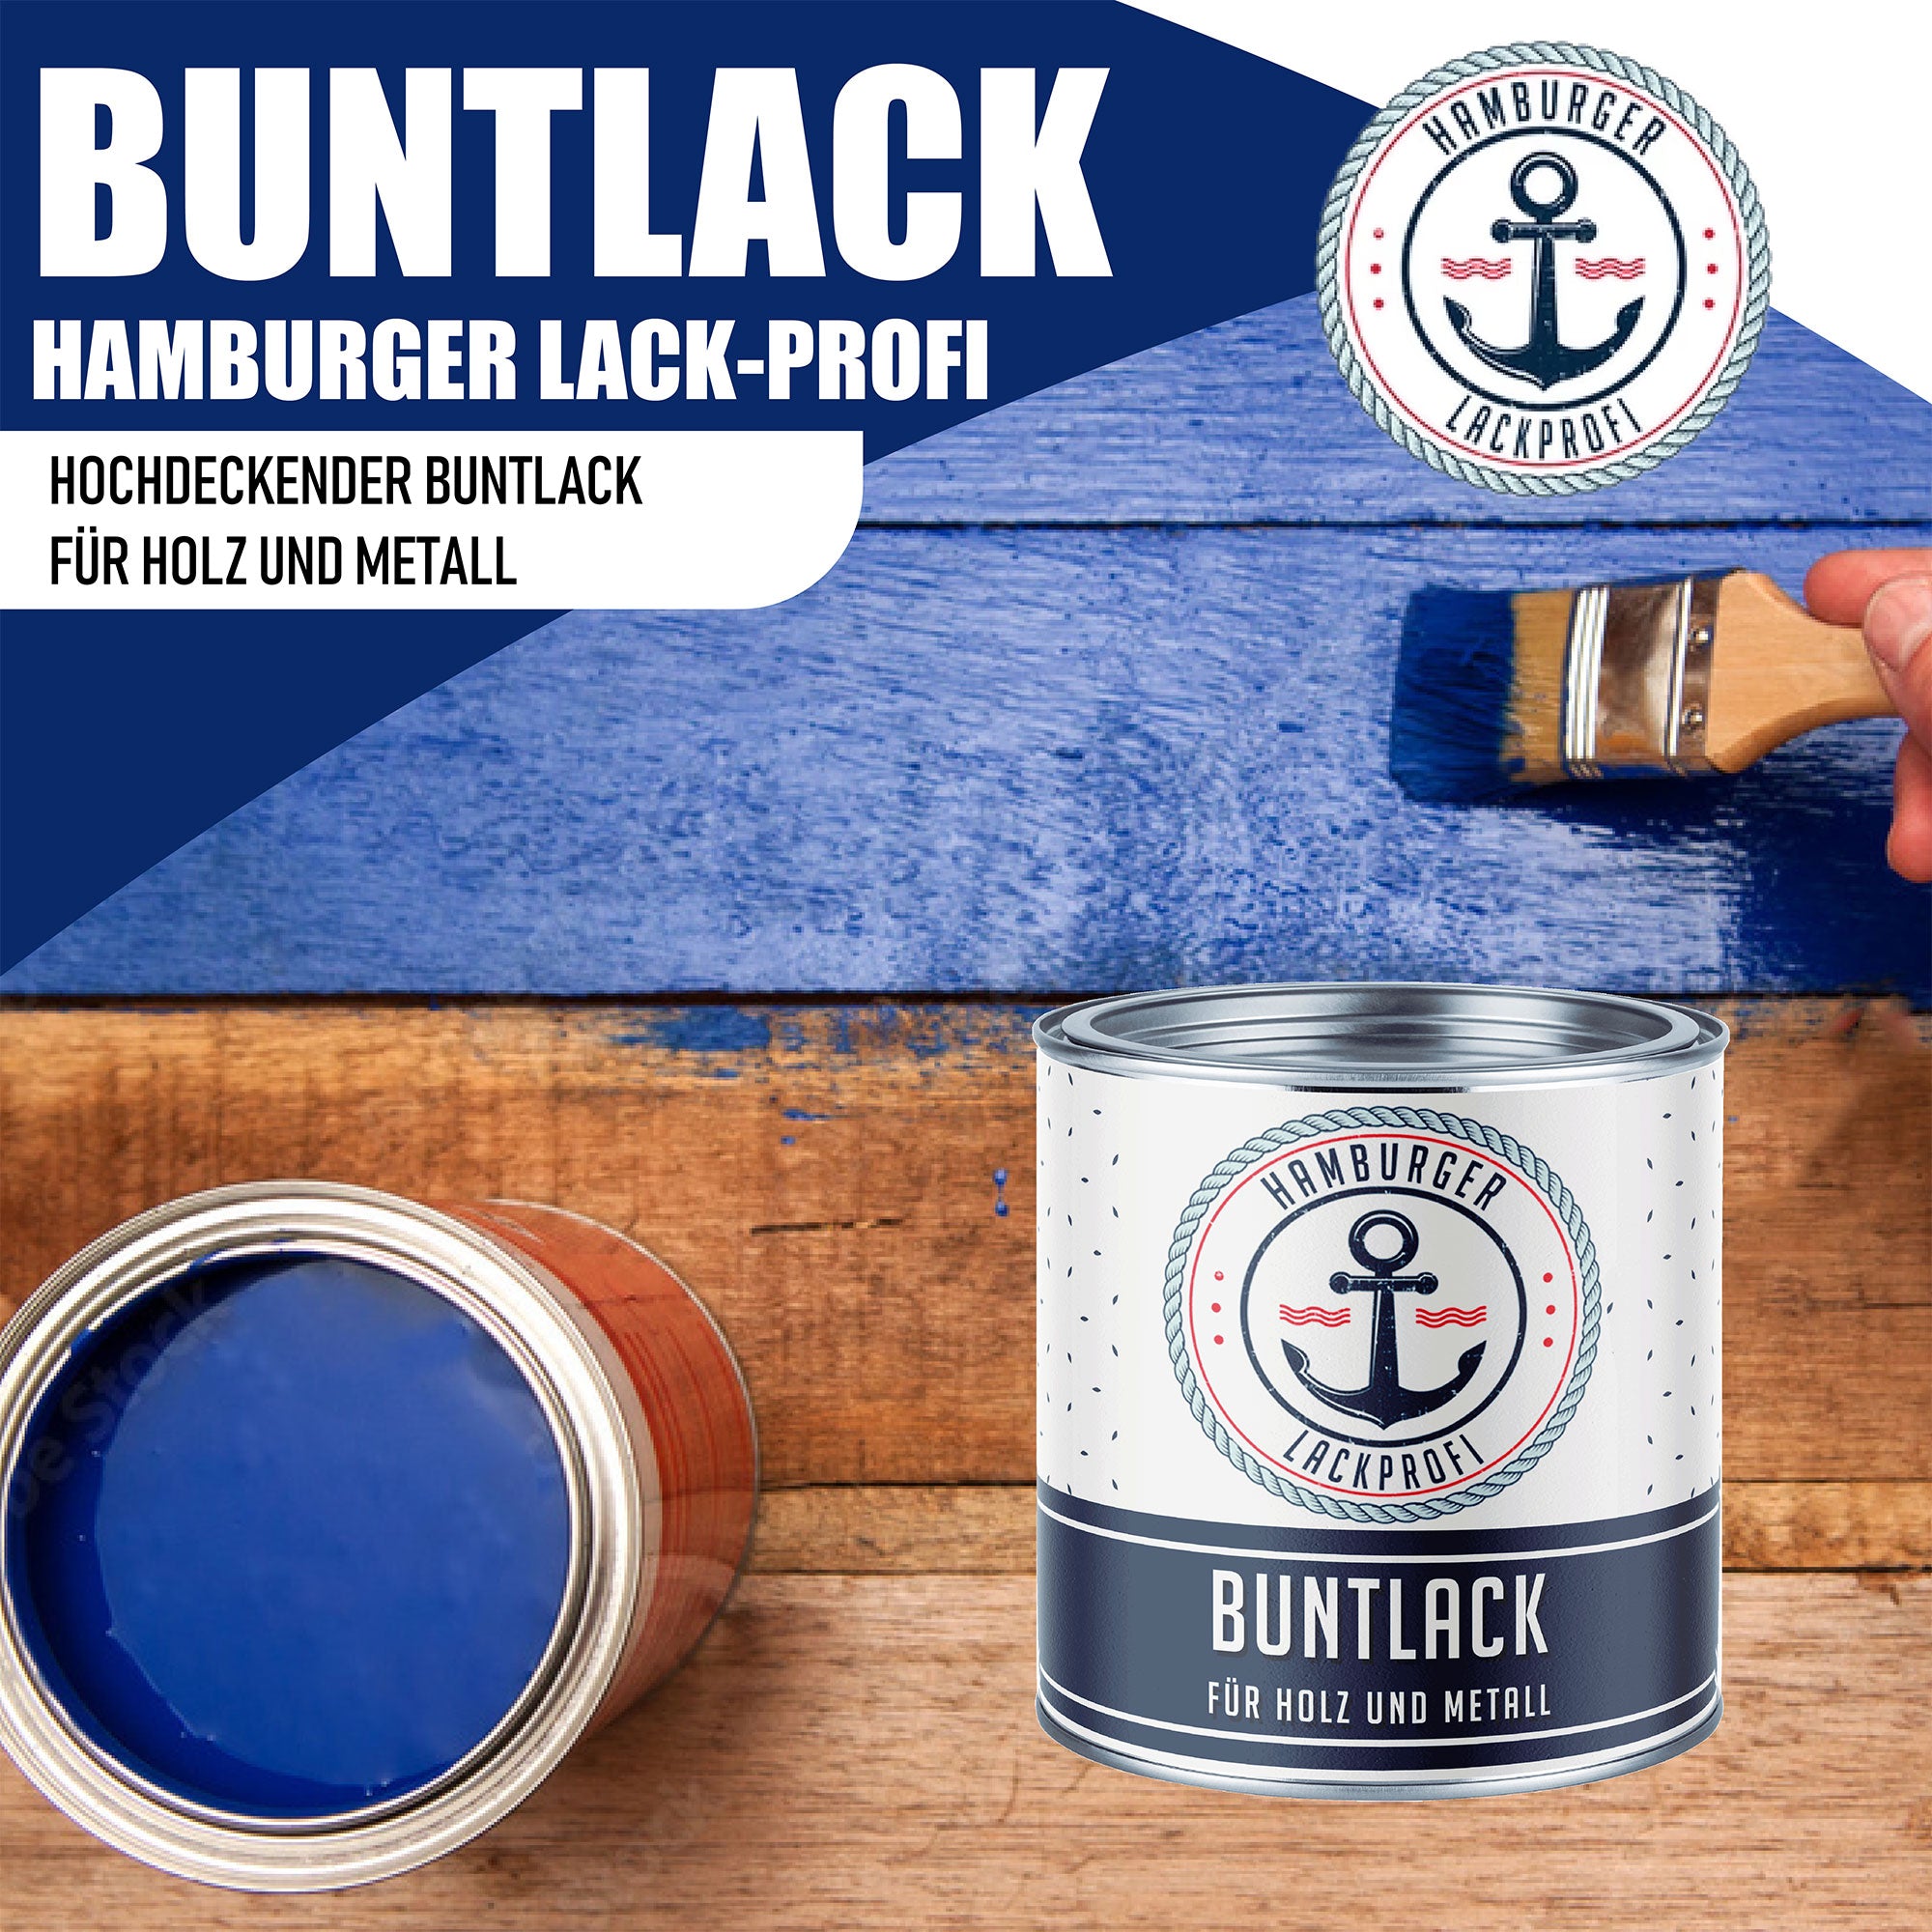 Hamburger Lack-Profi Buntlack in Orangebraun RAL 8023 mit Lackierset (X300) & Verdünnung (1 L) - 30% Sparangebot